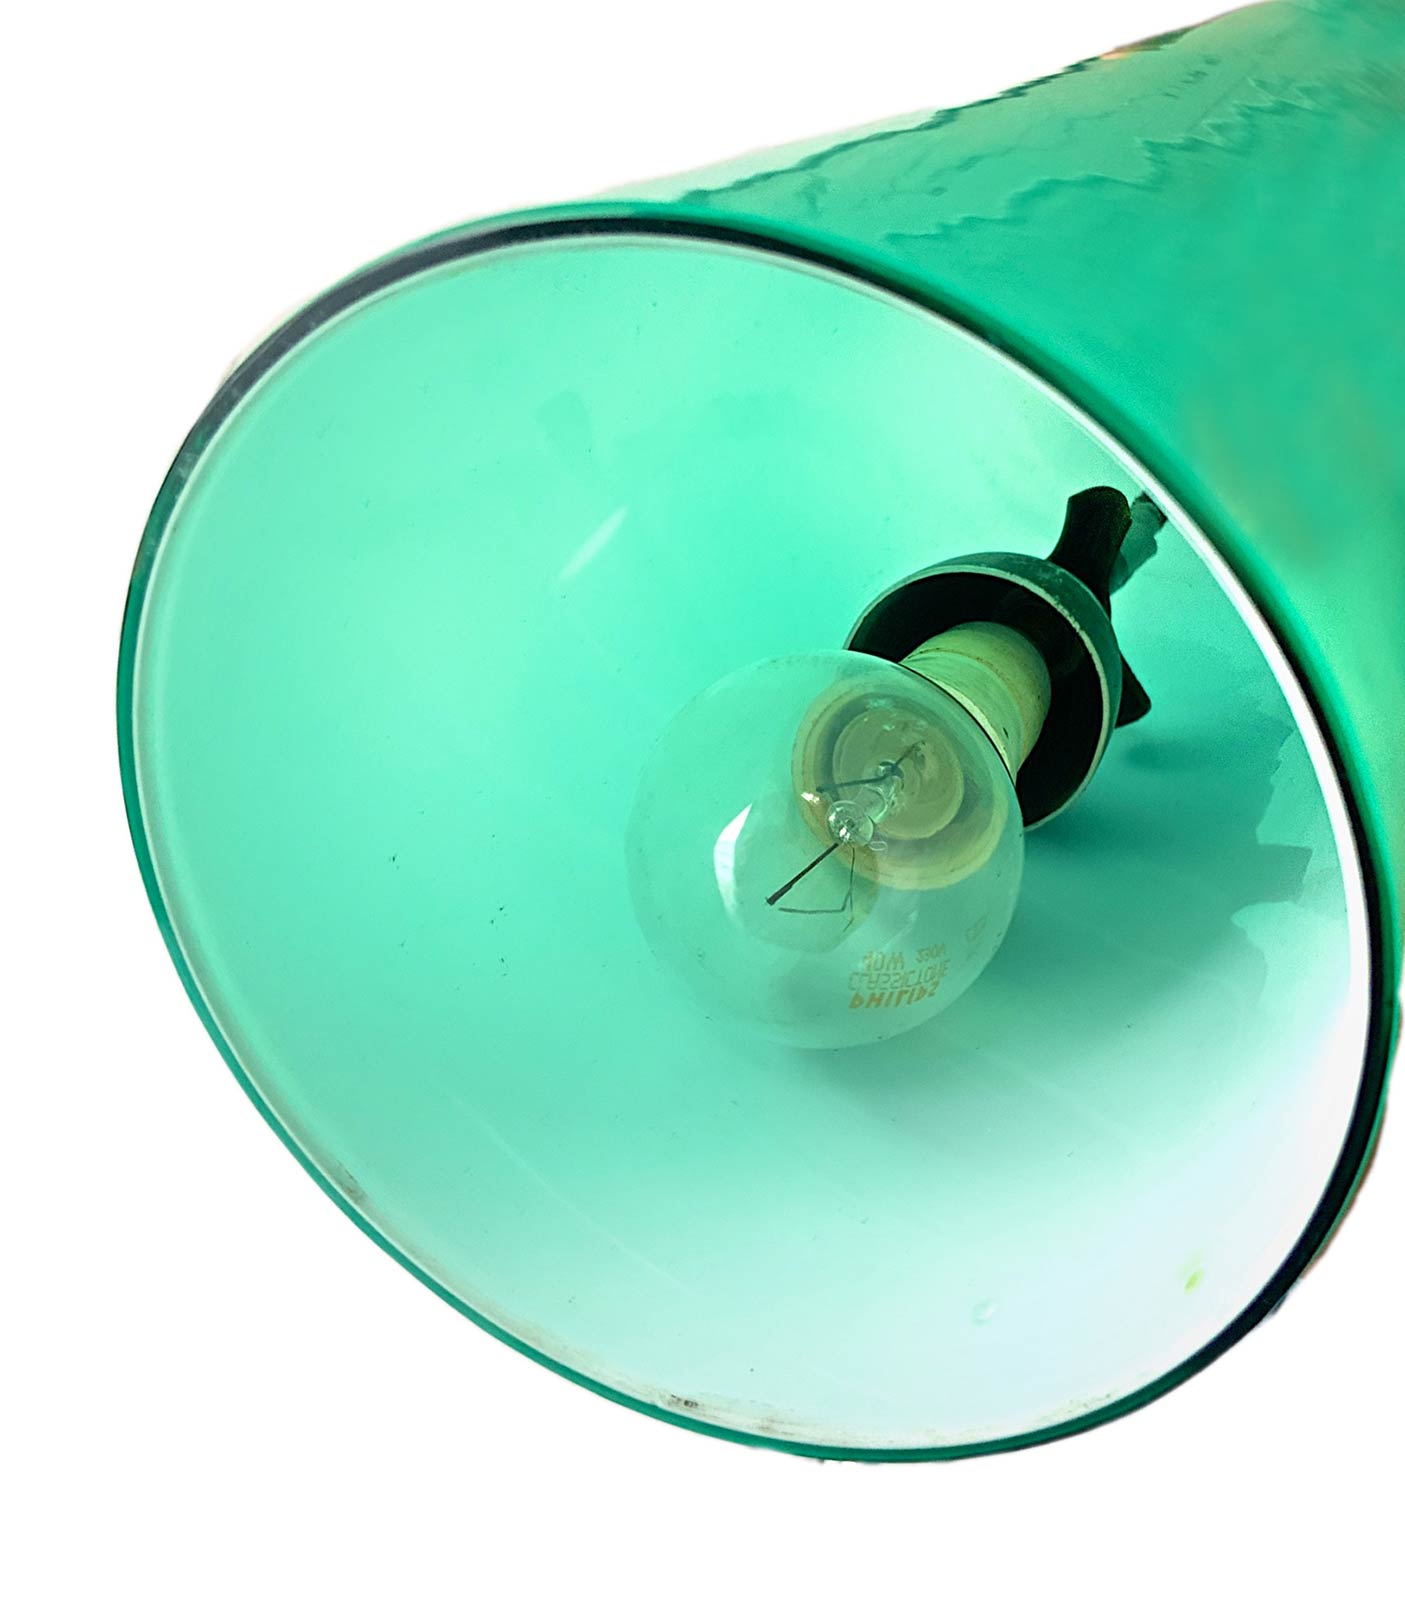 Vistosi Murano, Gino Vistosi design , glass chandelier encased in shades of green, cylindrical - Image 4 of 4